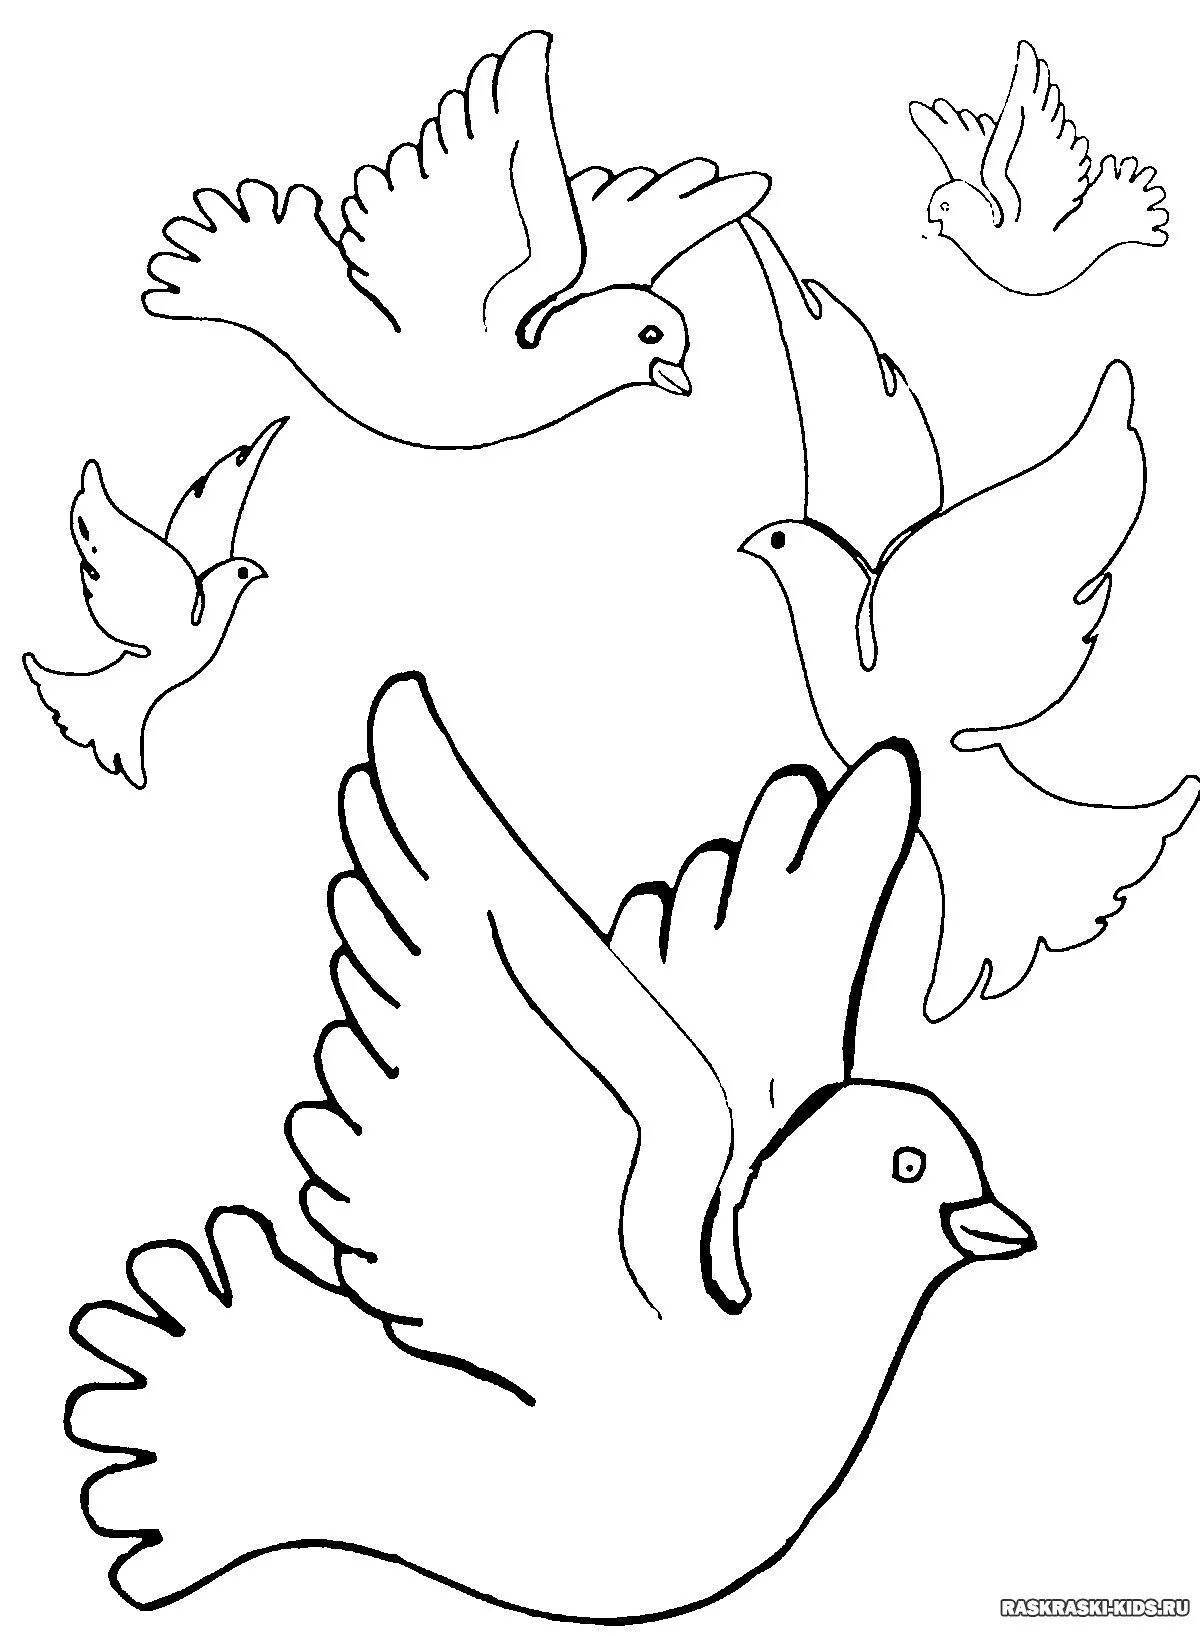 Impressive dove of peace coloring book for kids